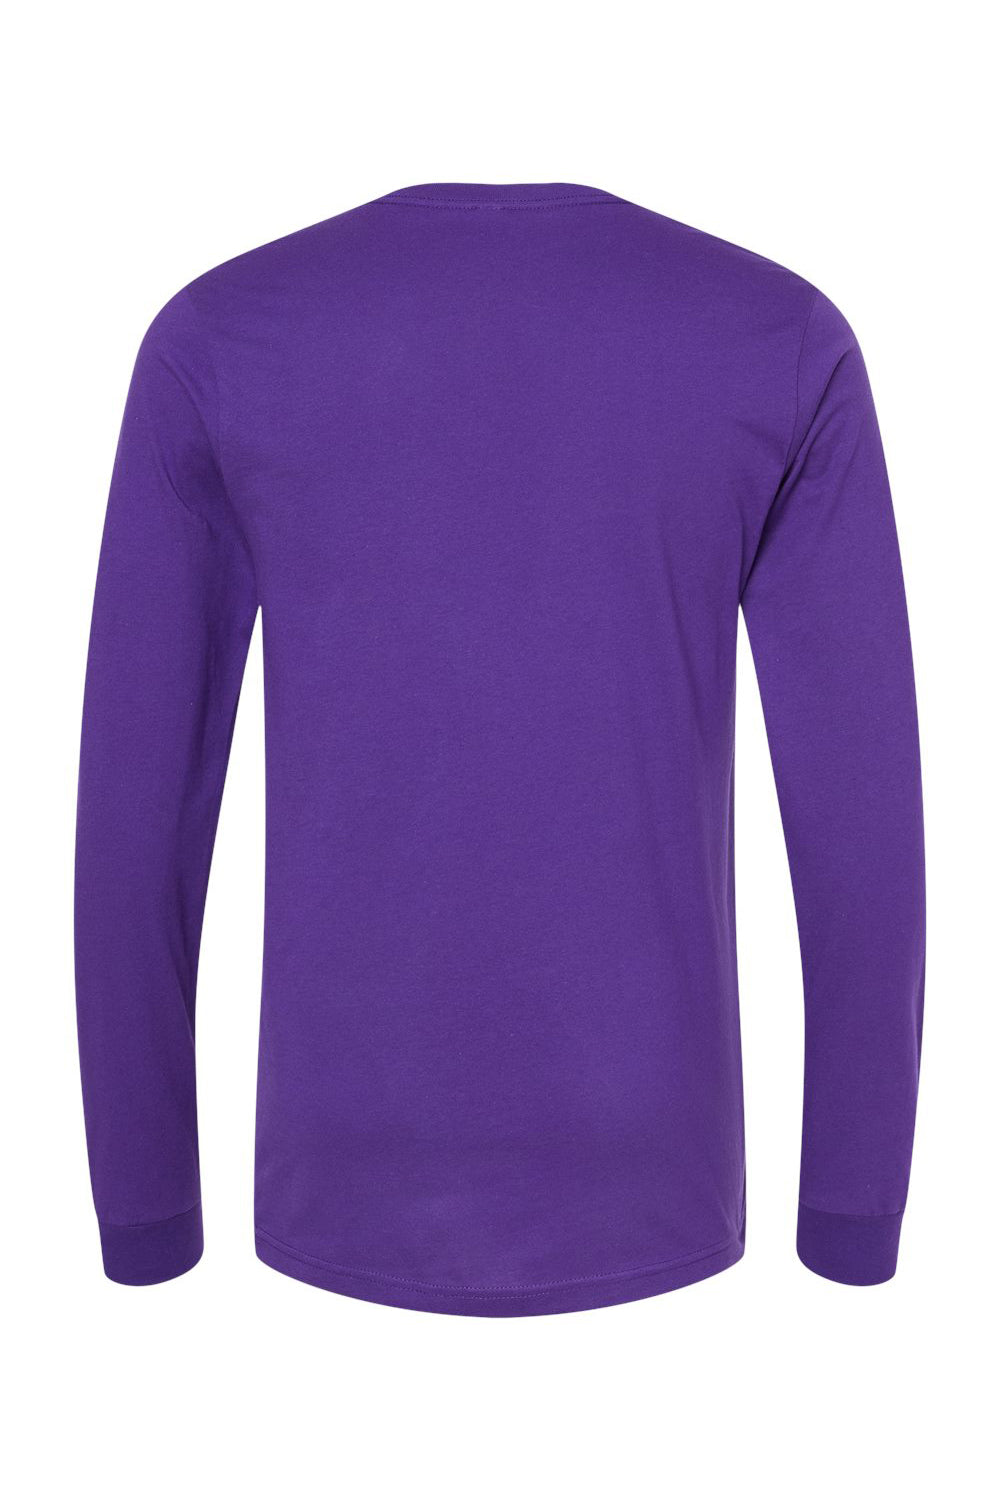 Bella + Canvas BC3501/3501 Mens Jersey Long Sleeve Crewneck T-Shirt Team Purple Flat Back